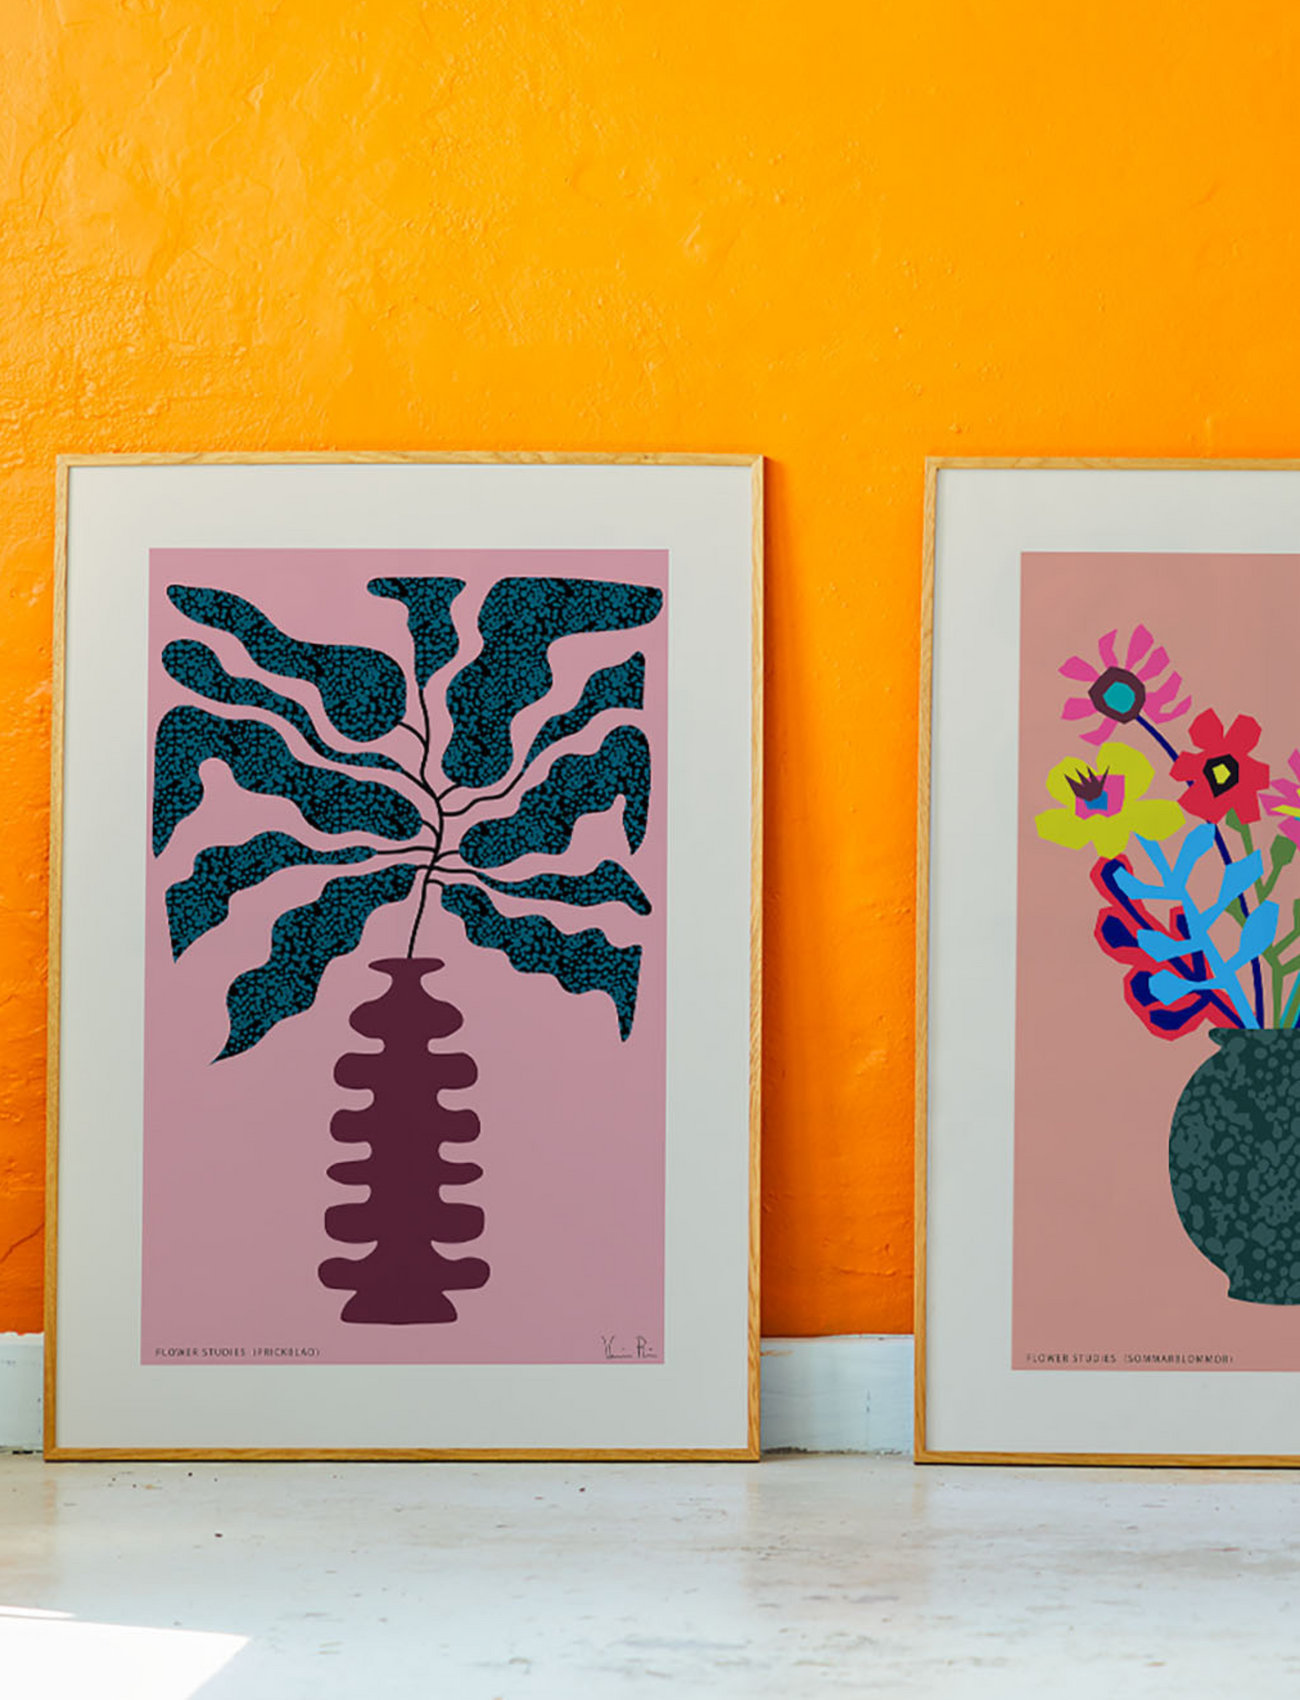 Paper Collective - Flower Studies 01 (Prickblad) - 50x70 - botanik - pink, red, green - 1